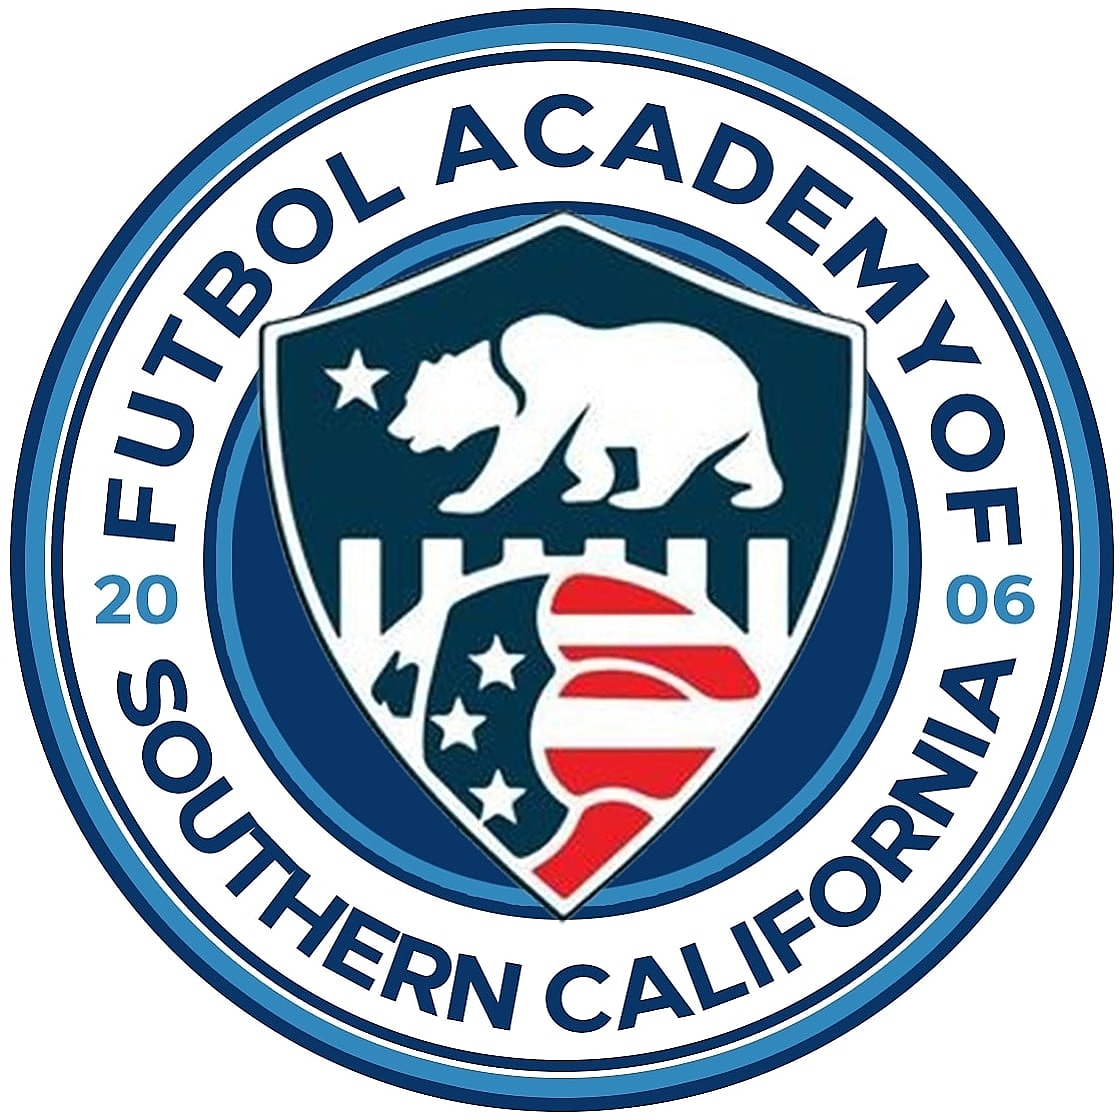 Futbol Academy Of Socal team badge